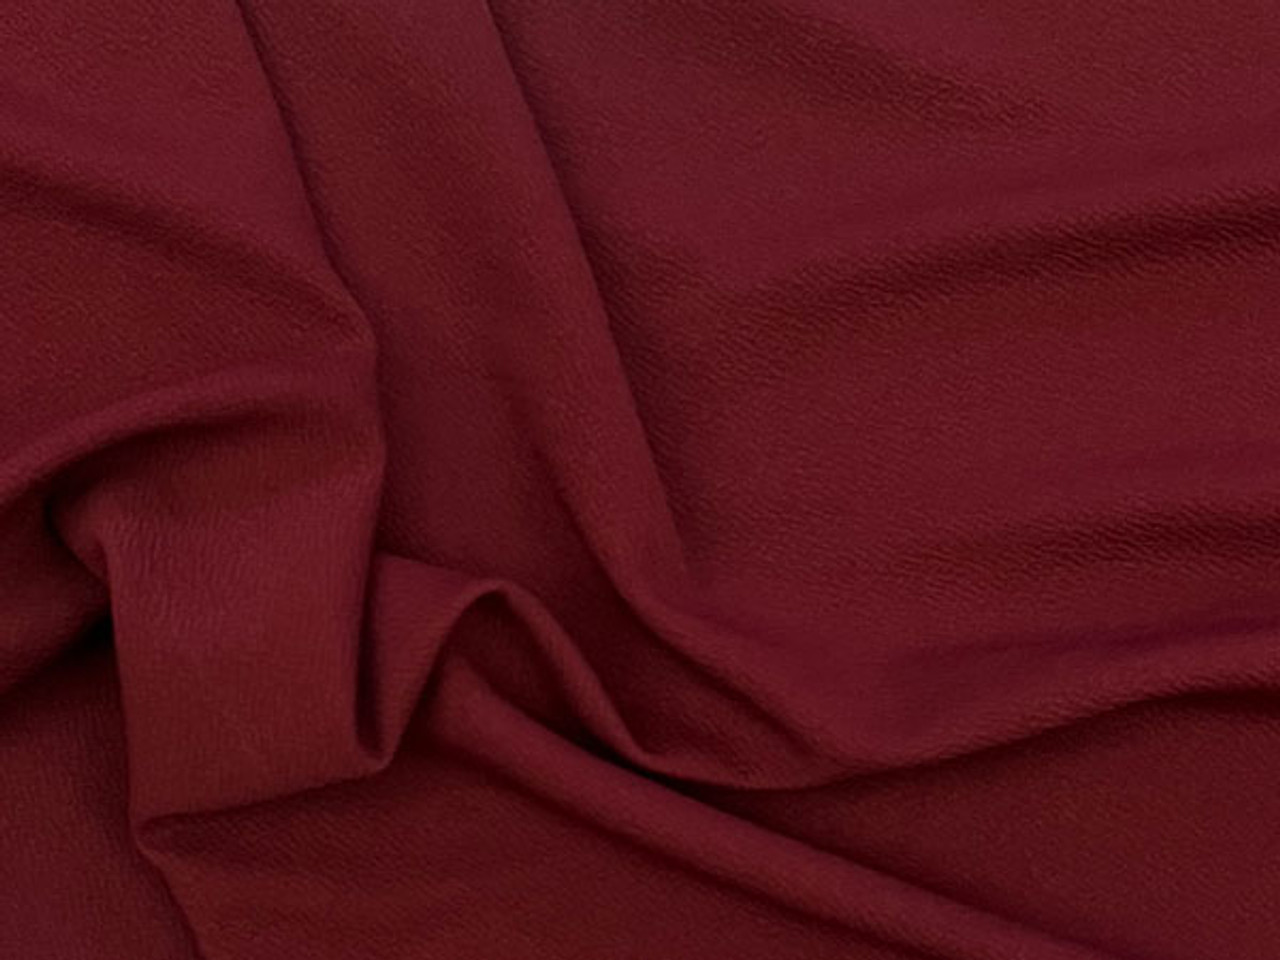 Knit Fabric Burgundy - fabric fabric